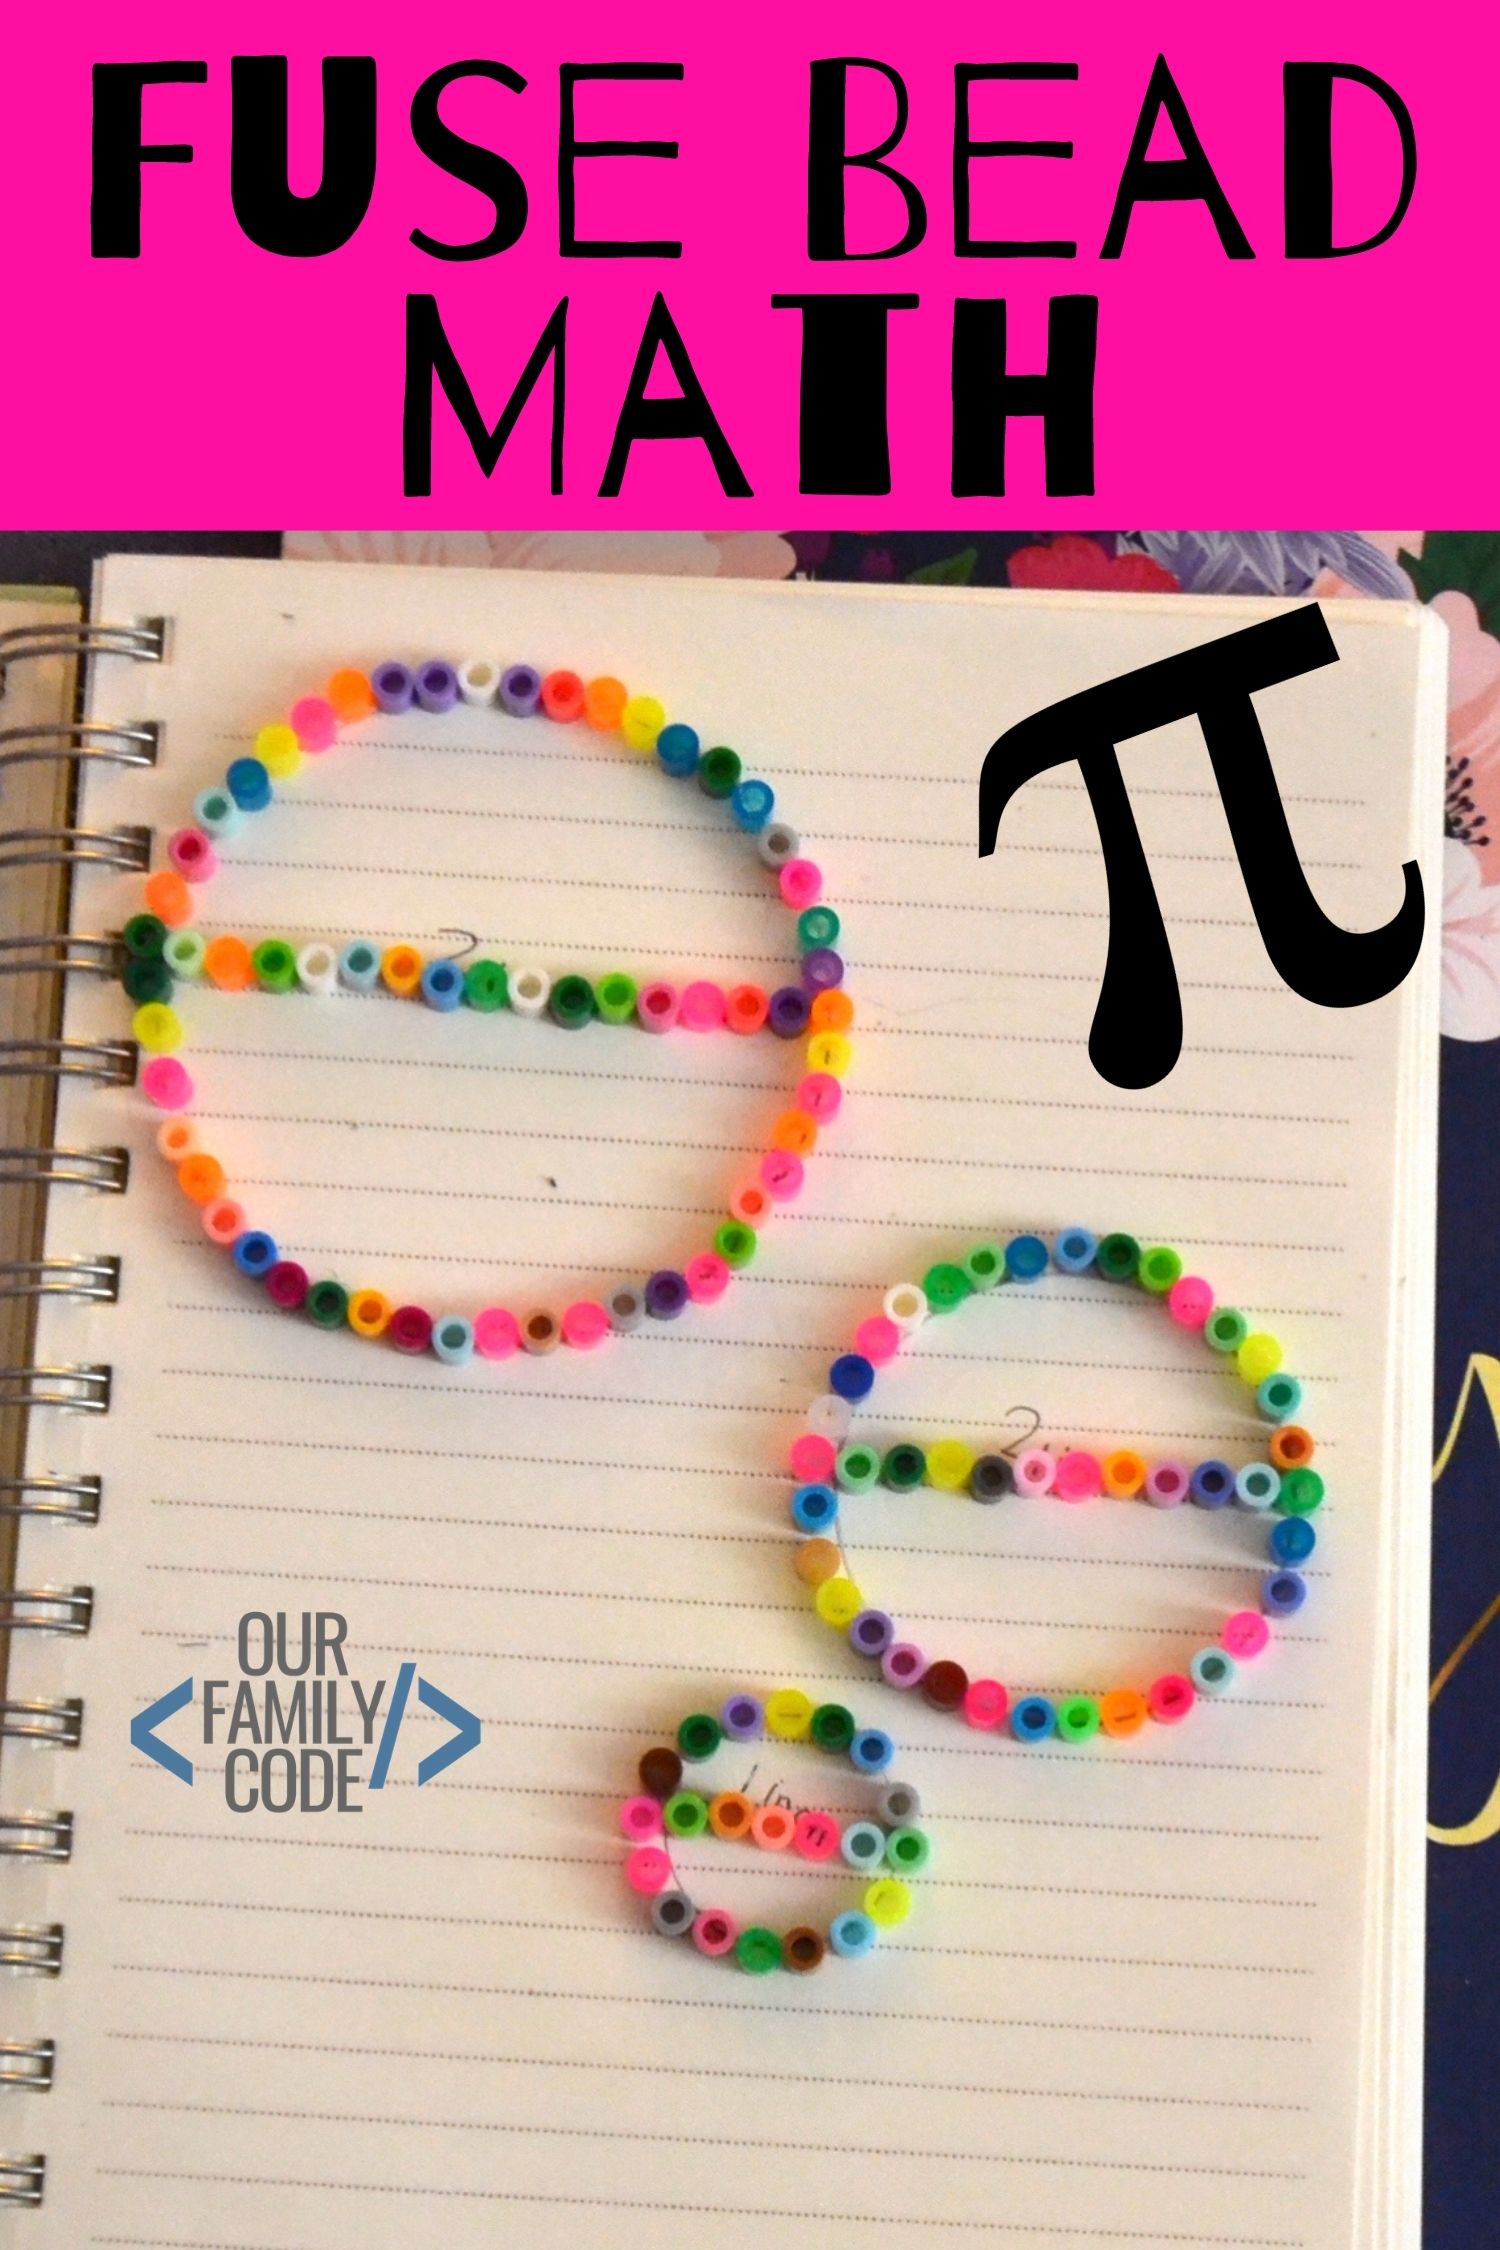 Fuse bead math! Explore the number Pi by making math sun catchers out of fuse beads for a fun math + art STEAM activity! #STEAM #PiDay #Fibonacci #mathforkids #mathart #craftsforkids #STEM #homeschool